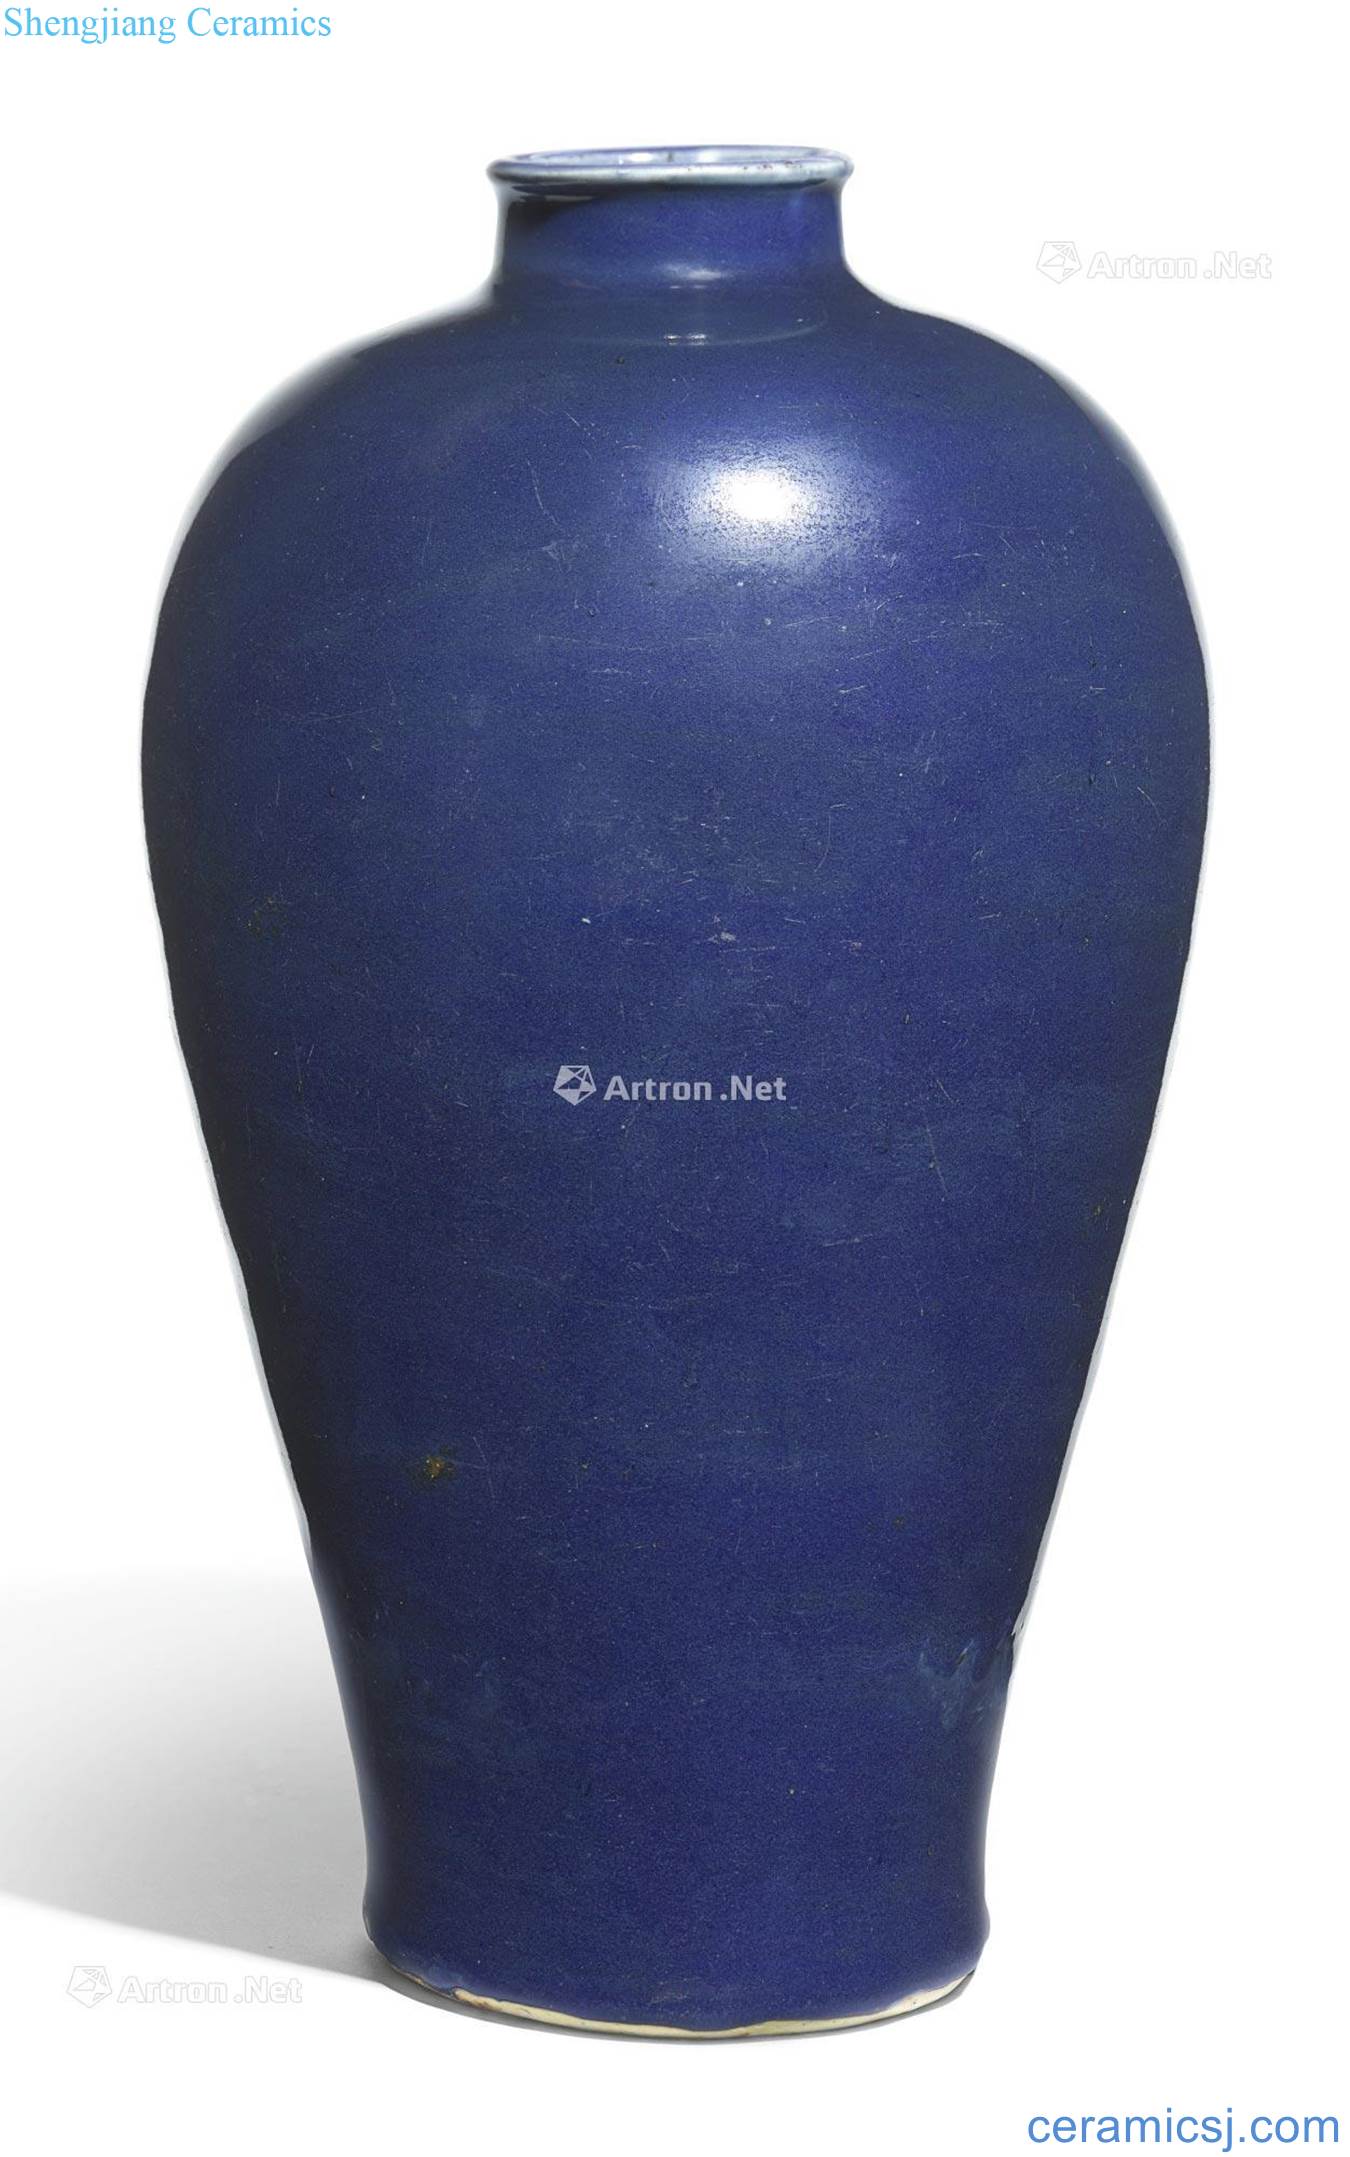 The 15th/16th century The blue glaze plum bottle